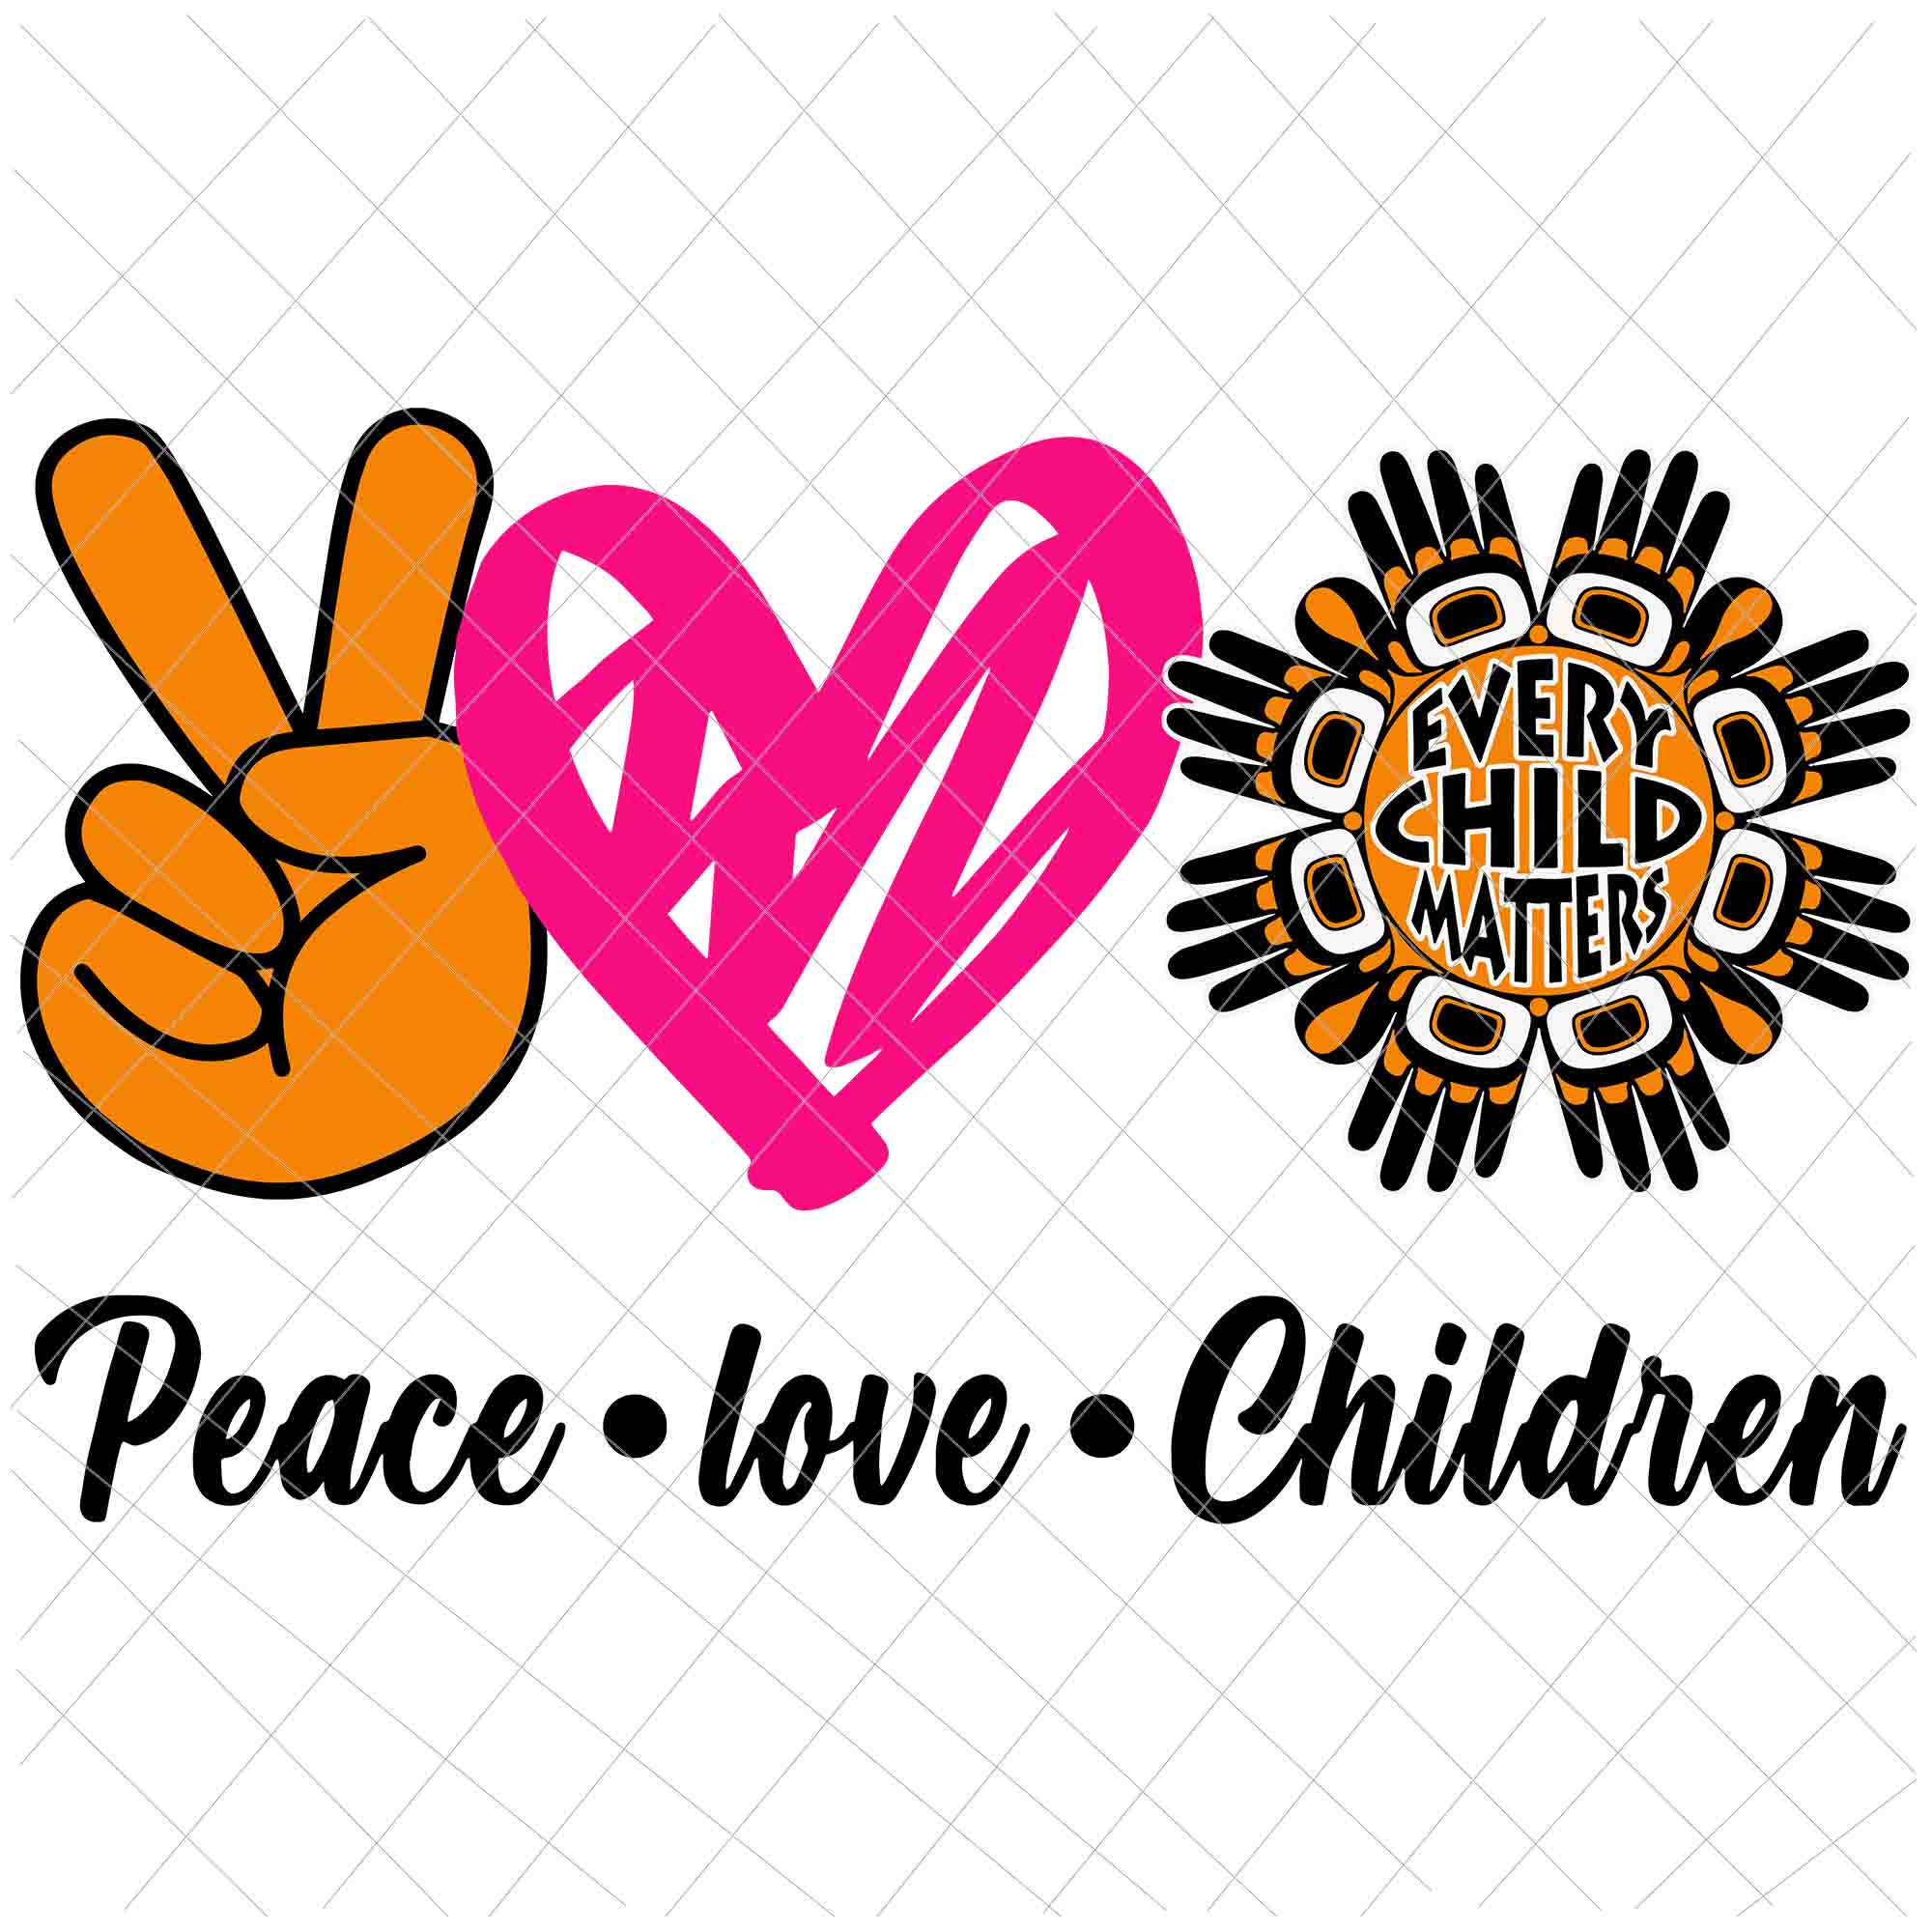 Peacle Love Children Svg, Every Child Matters Svg, Orange Day Svg, Residential Schools Svg, Indigenous Education Orange Day Svg